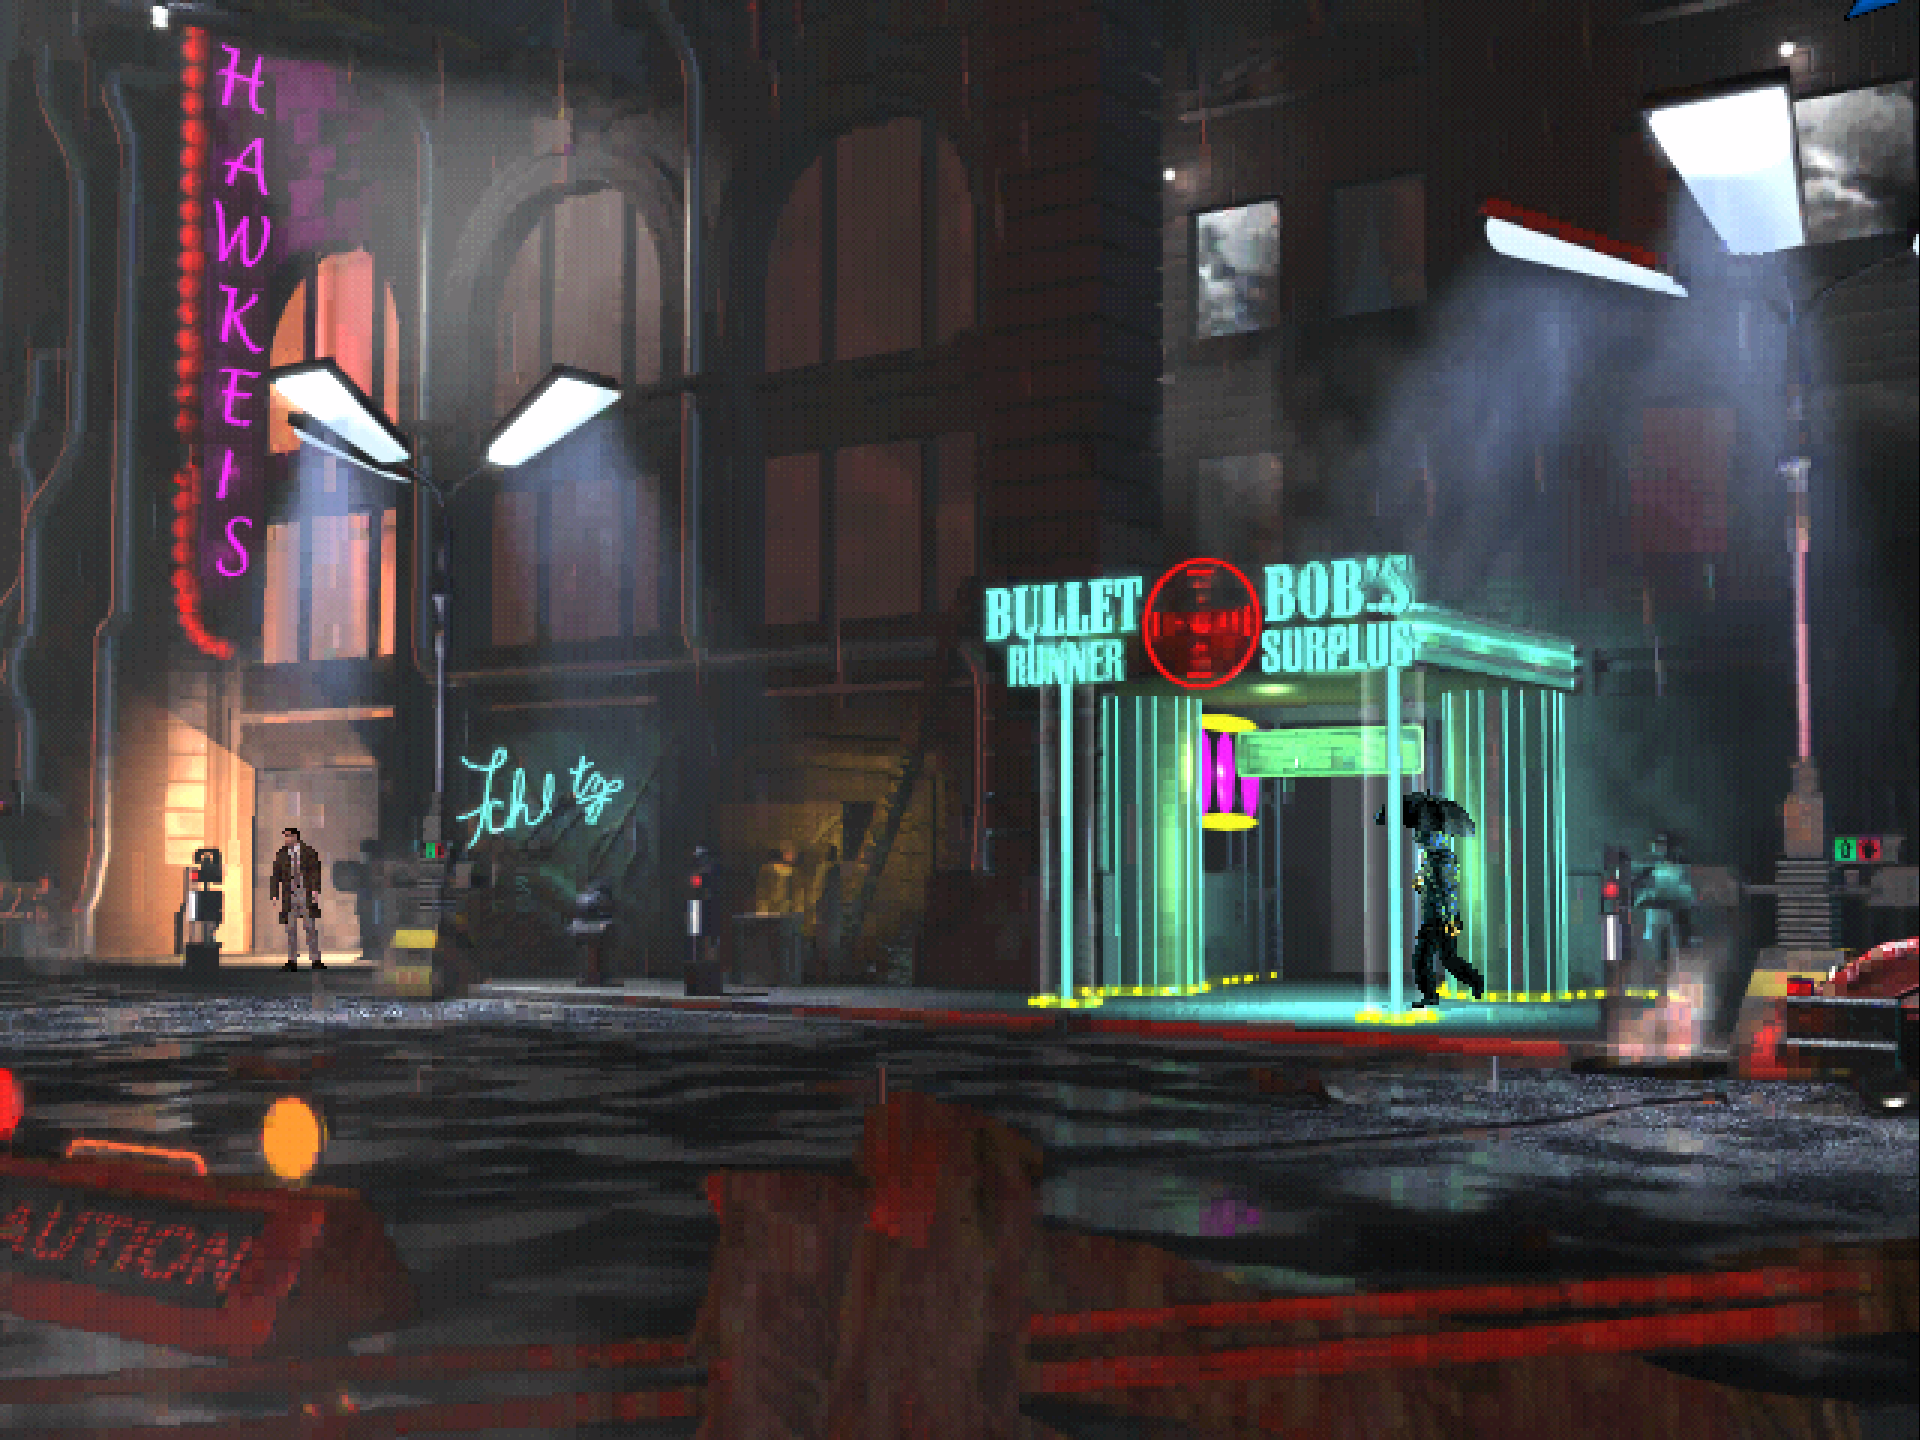 The rainy streets outside Bob's Bullet Runner shop in a Blade Runner ScummVM screenshot.